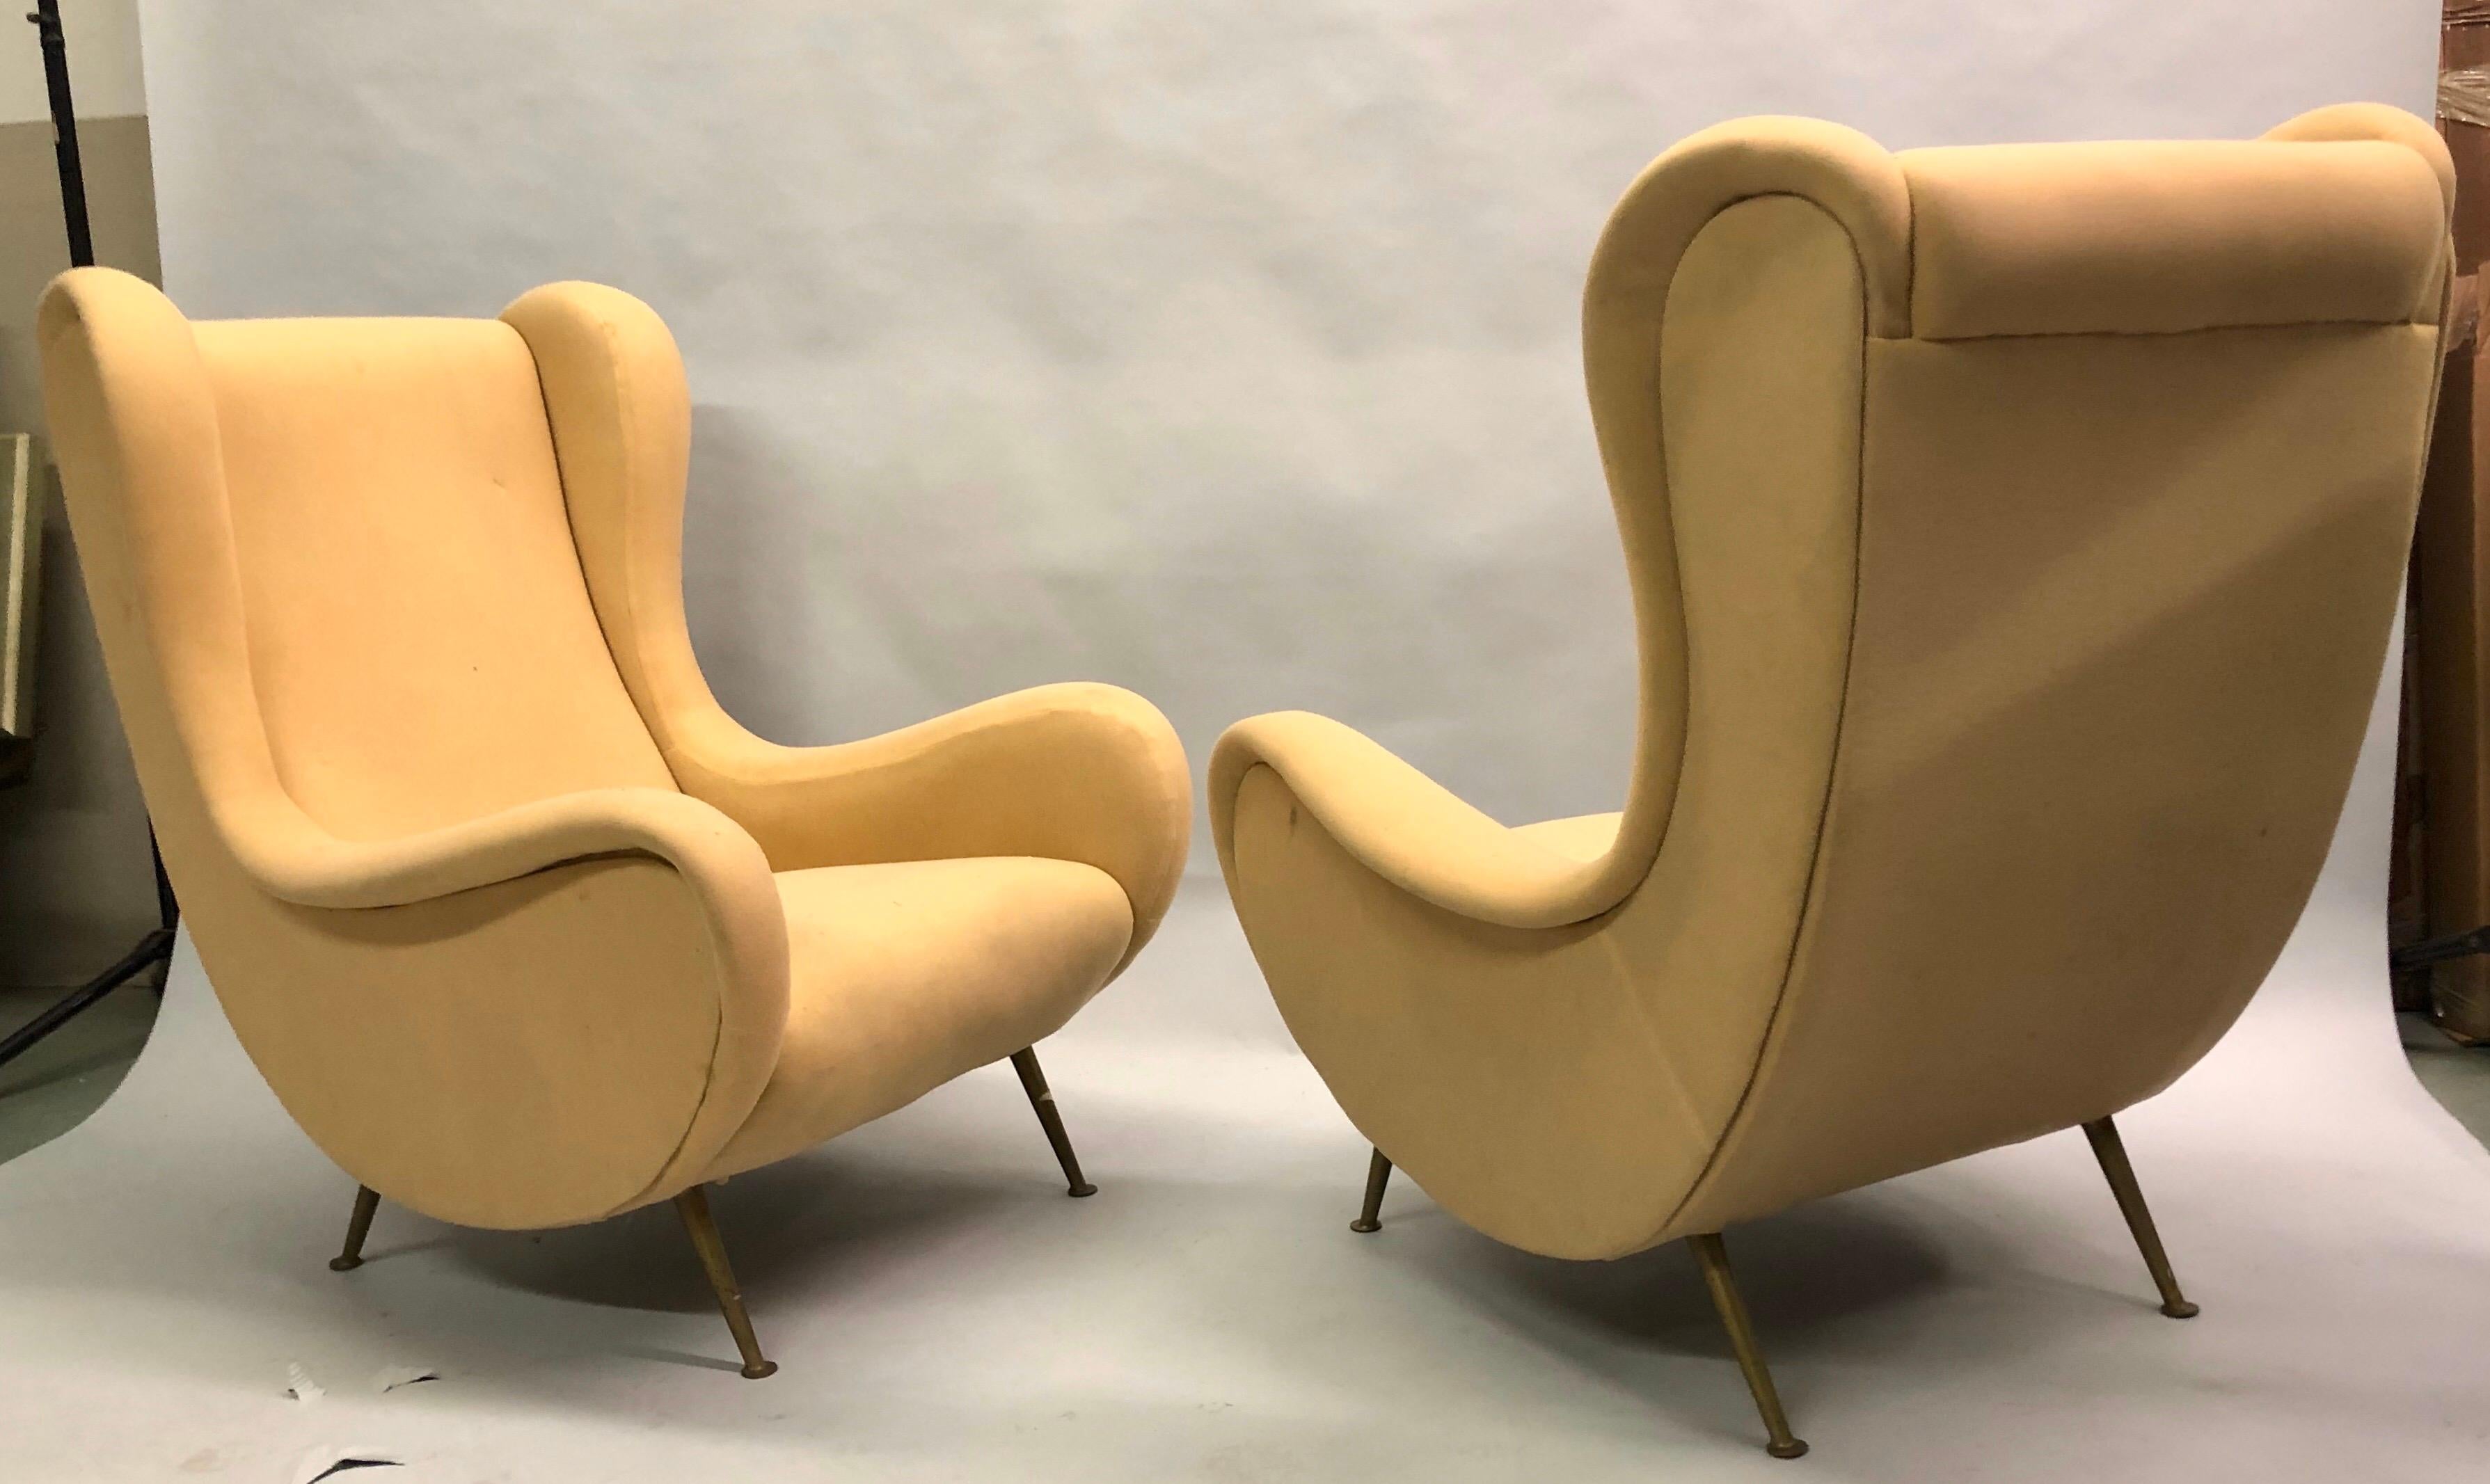 Rare, Elegant and comfortable pair of vintage Italian Mid-Century Modern 